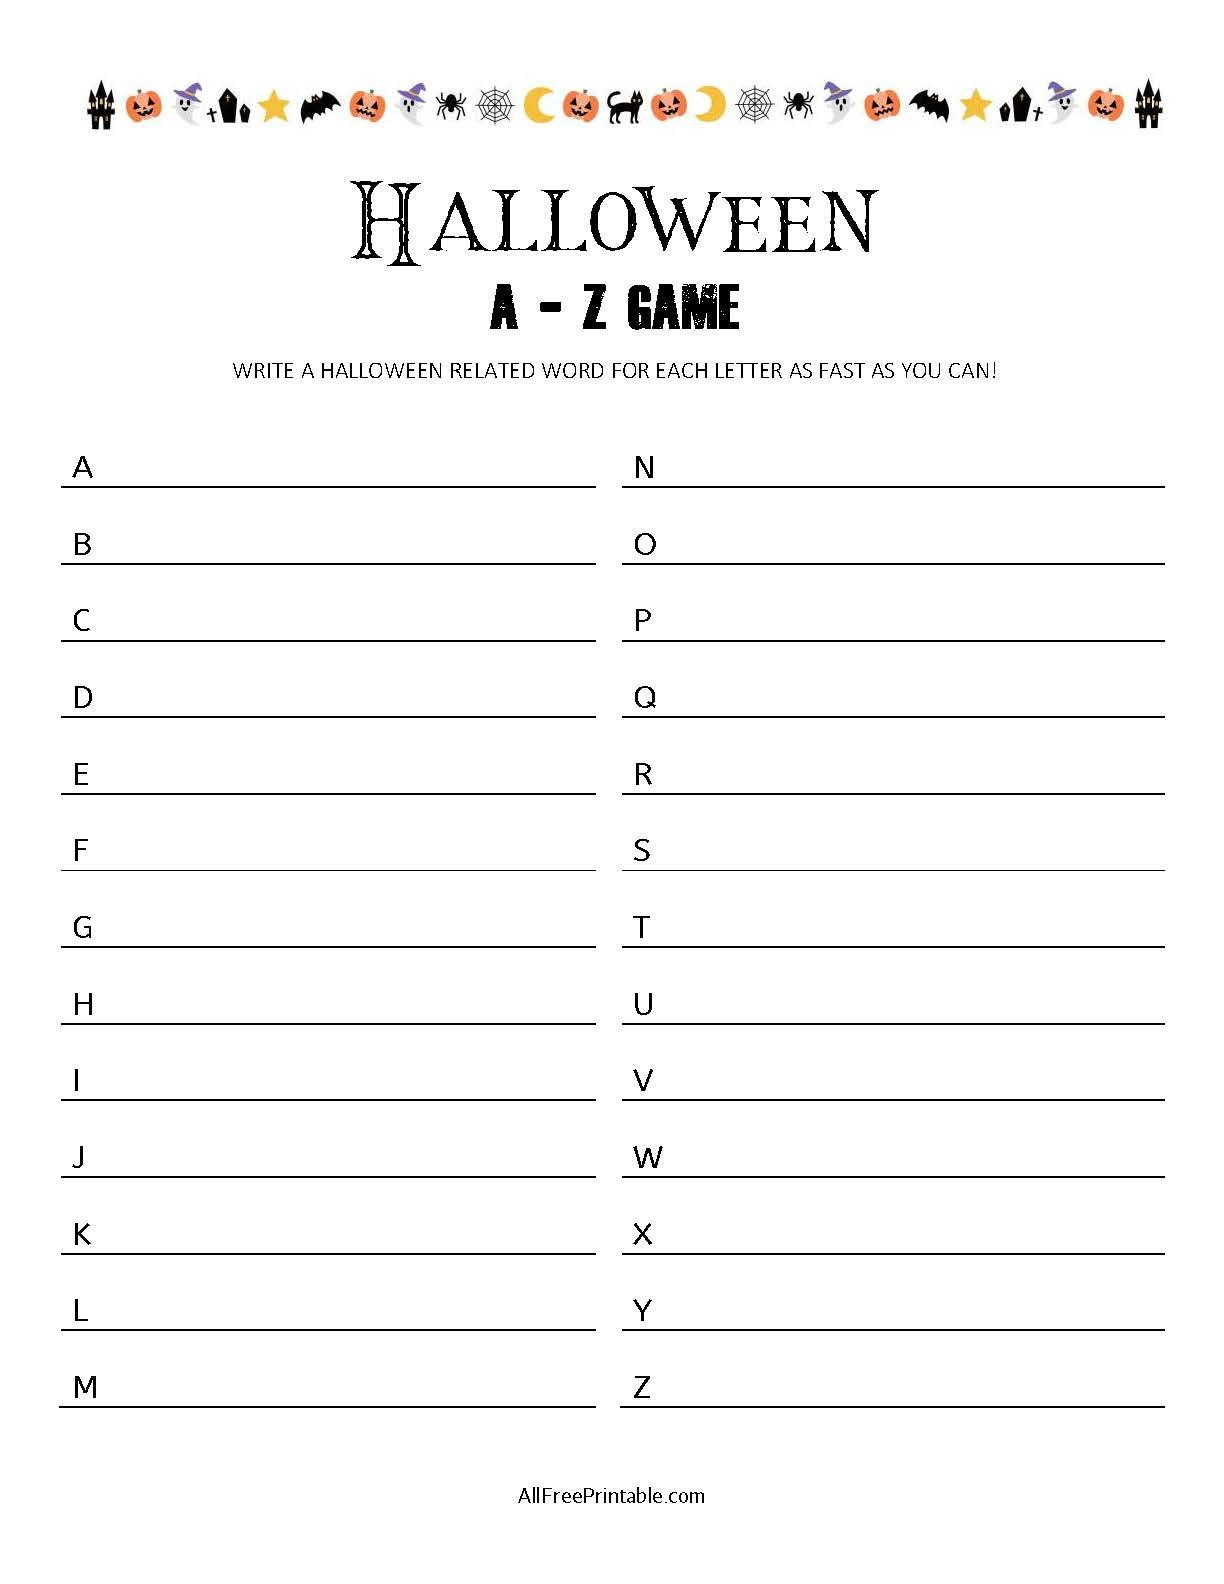 Free Printable Halloween A-Z Game